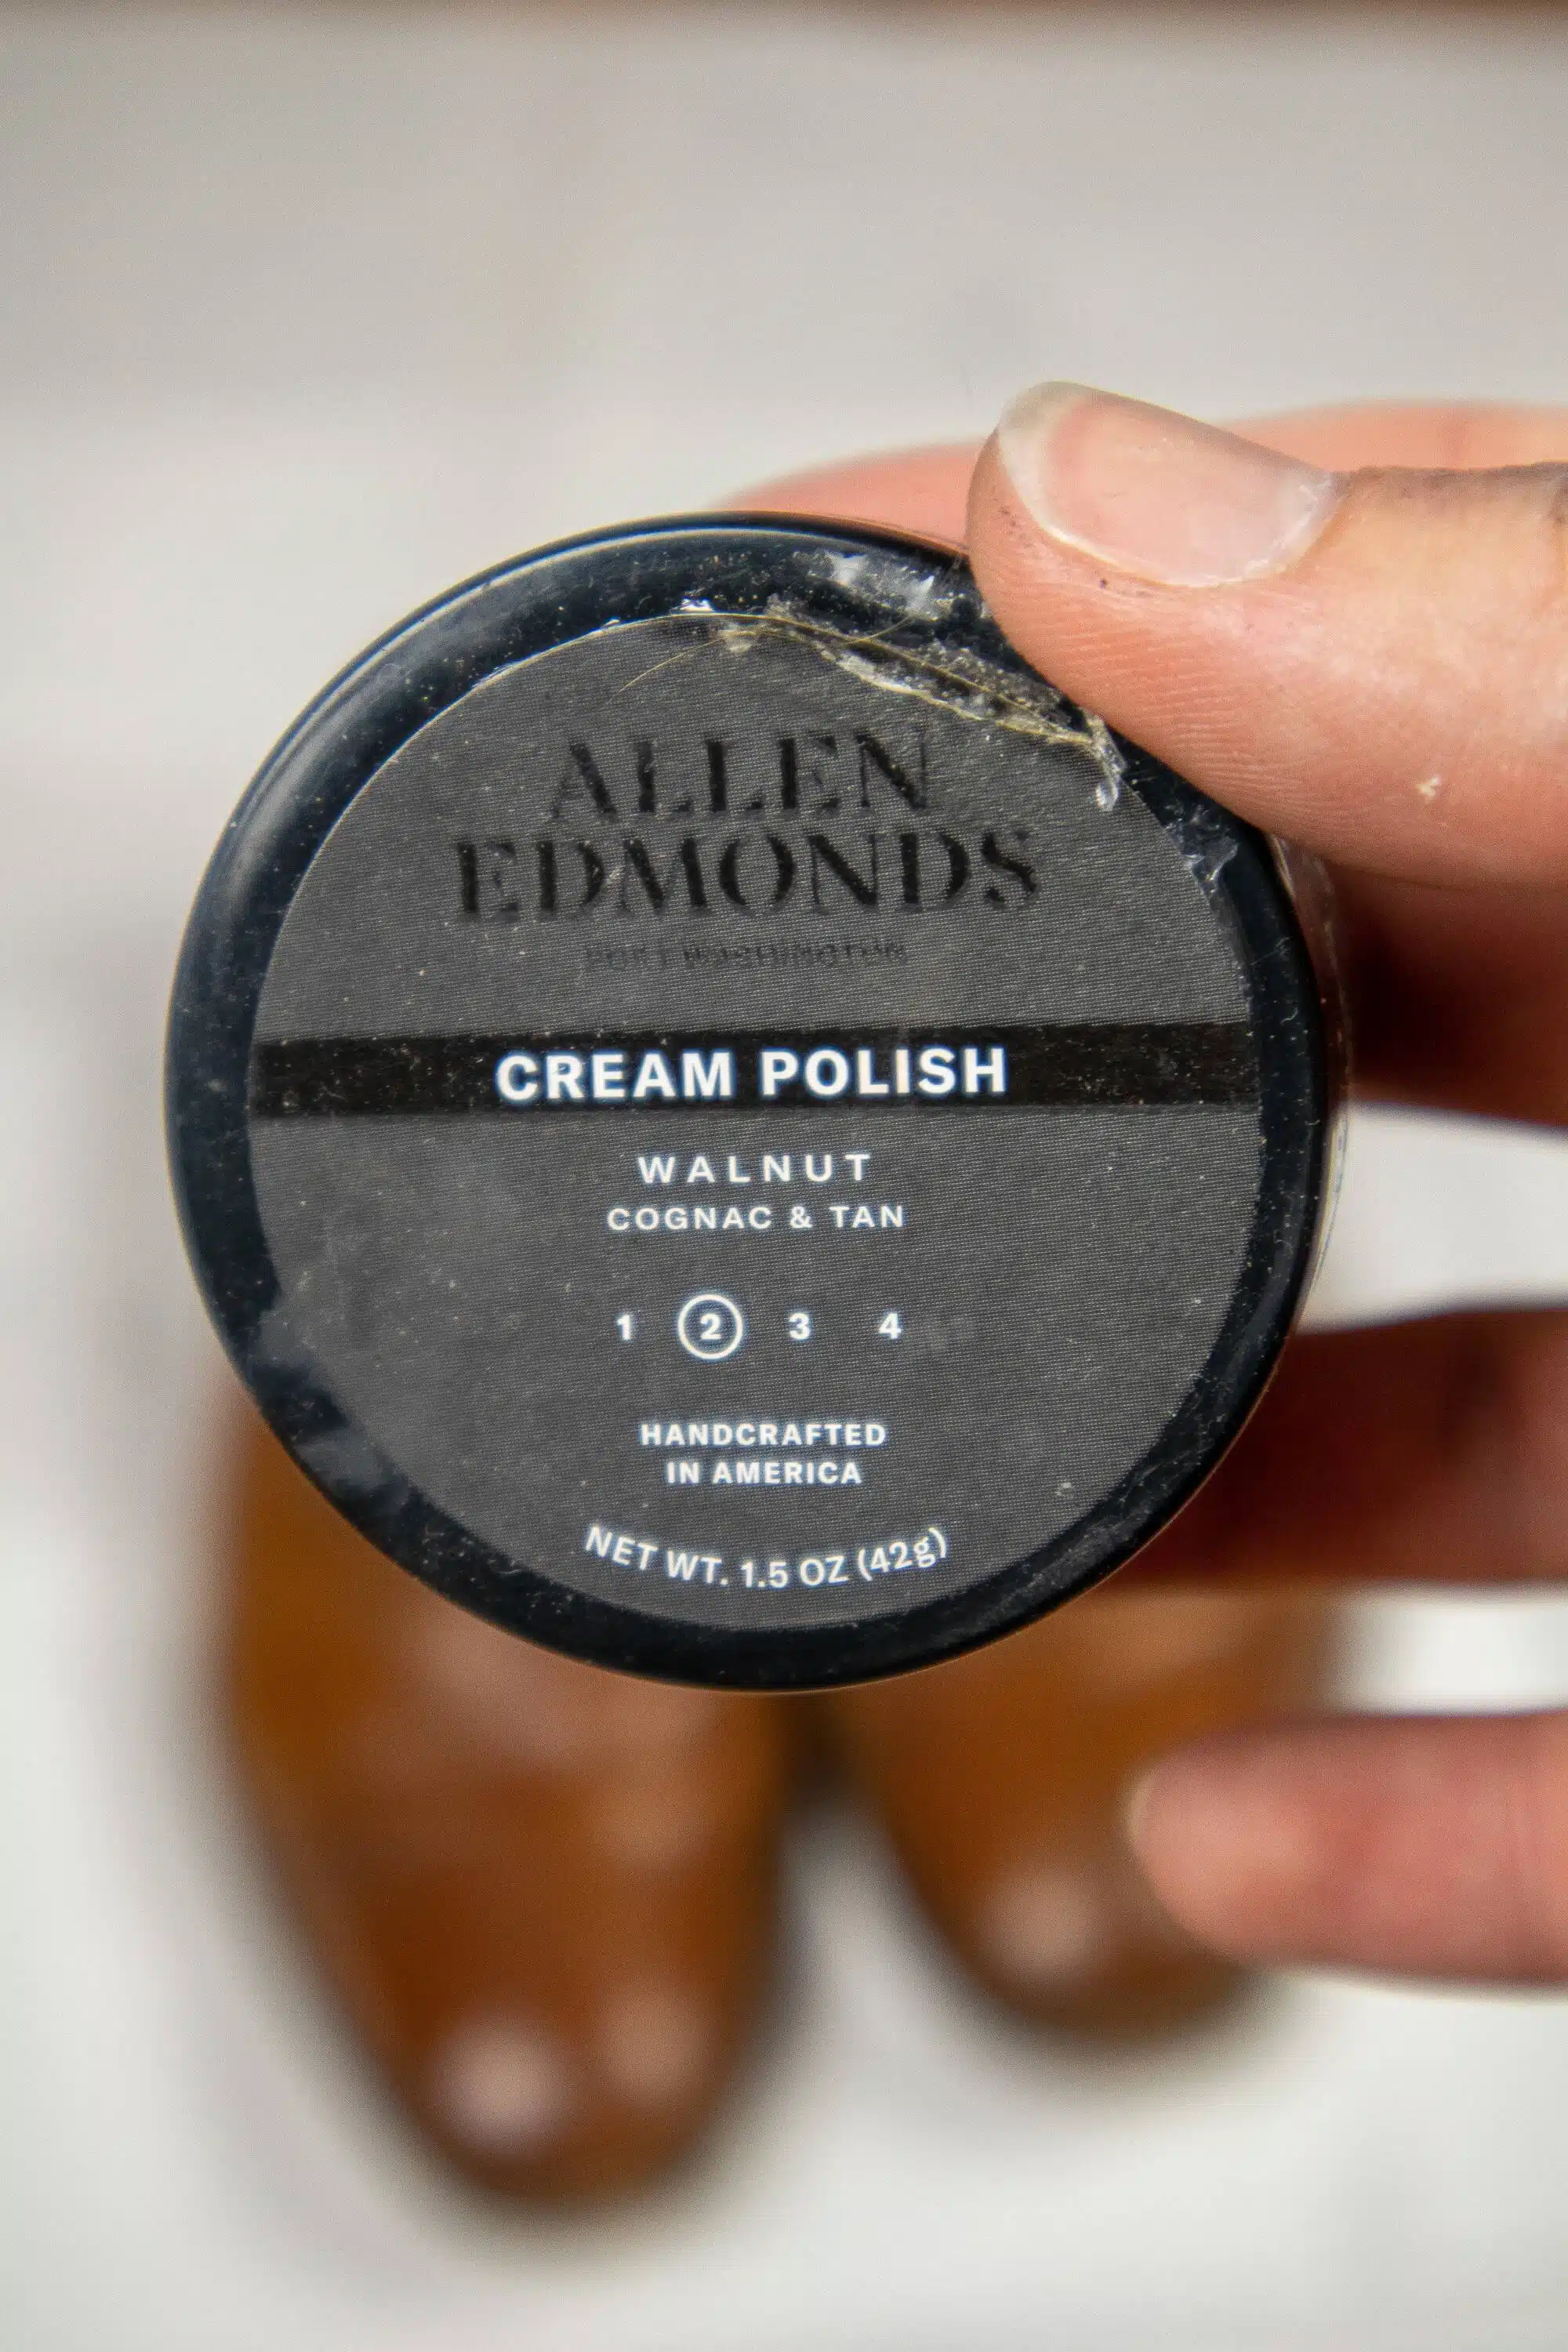 Allen Edmonds Cream Polish